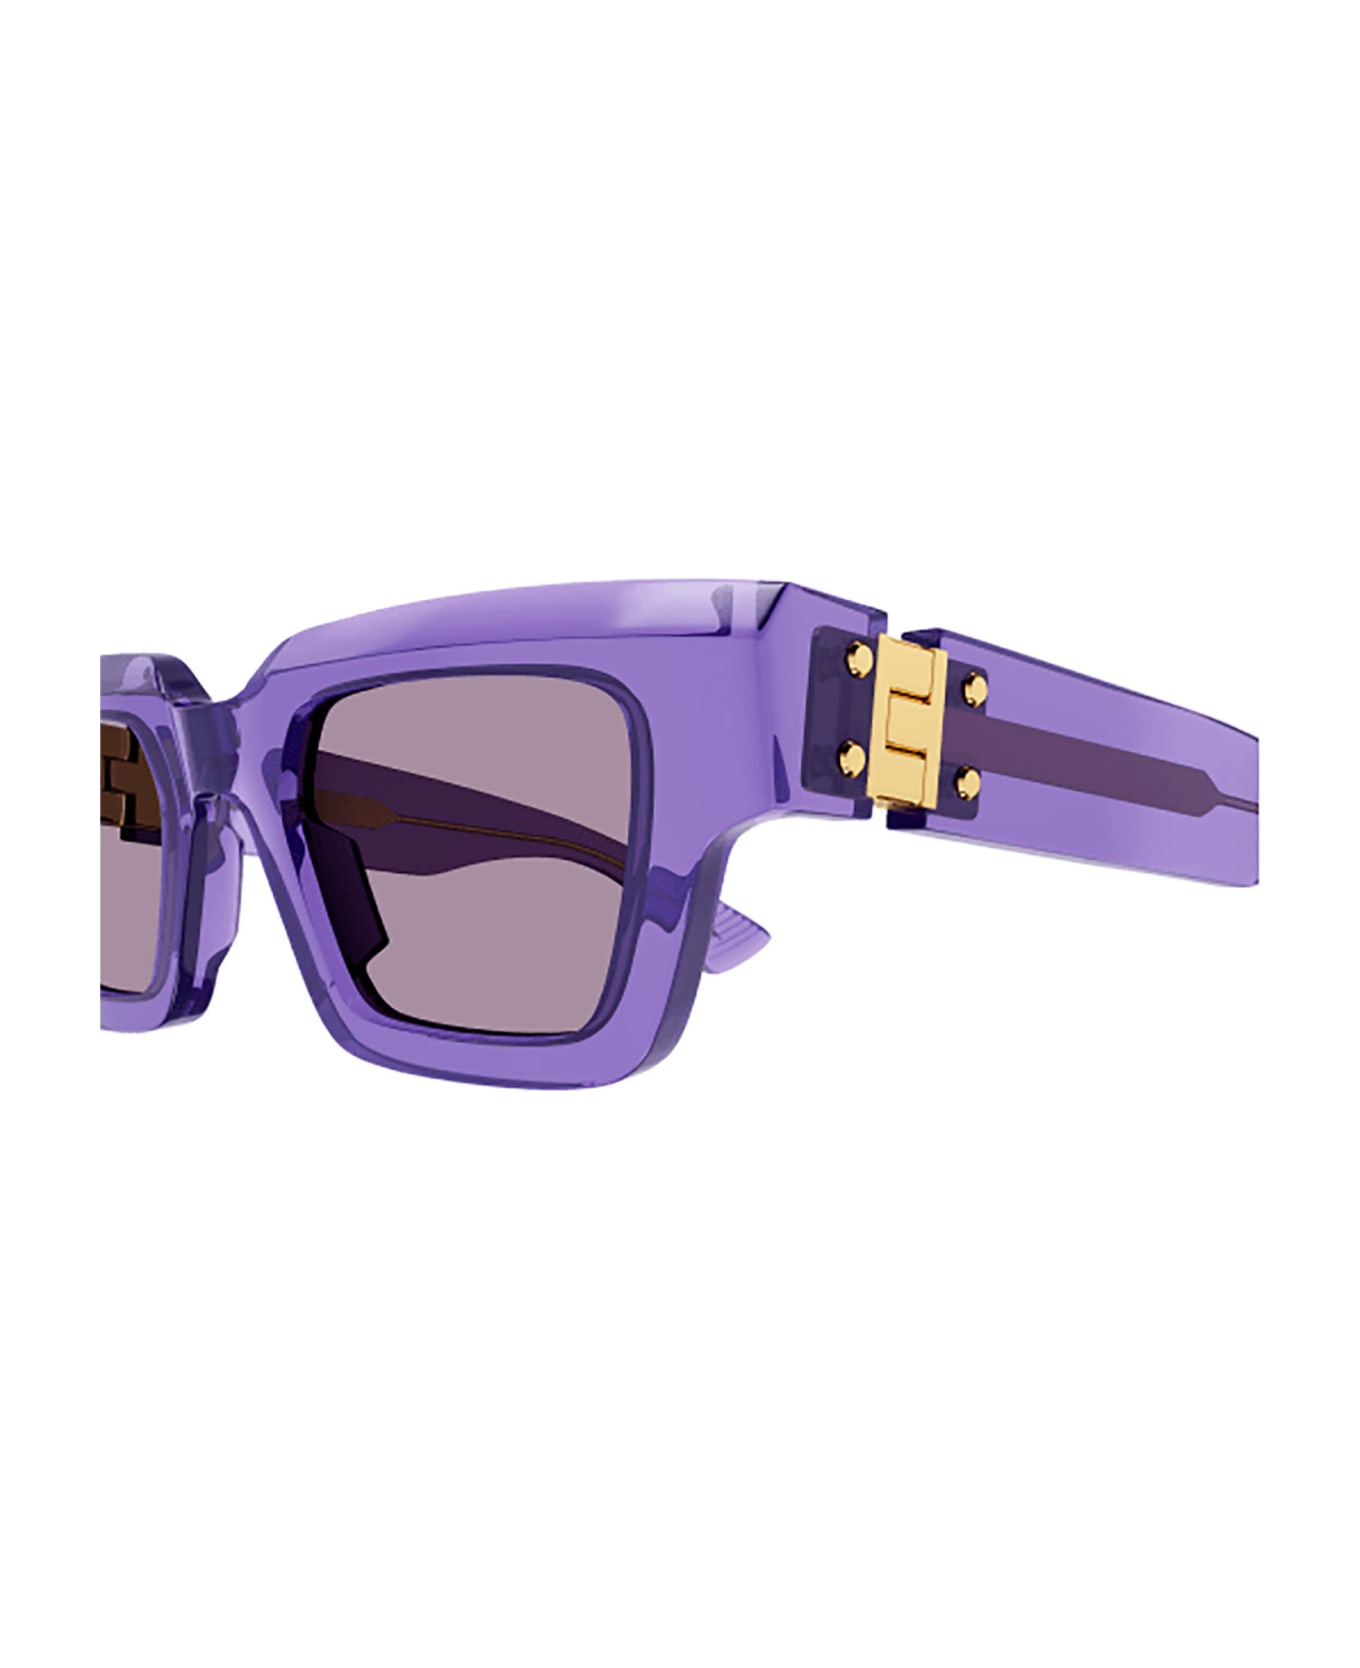 Bottega Veneta Eyewear 1g7r4ni0a - 003 Gucci Eyewear GG0767S001 aviator-frame sunglasses